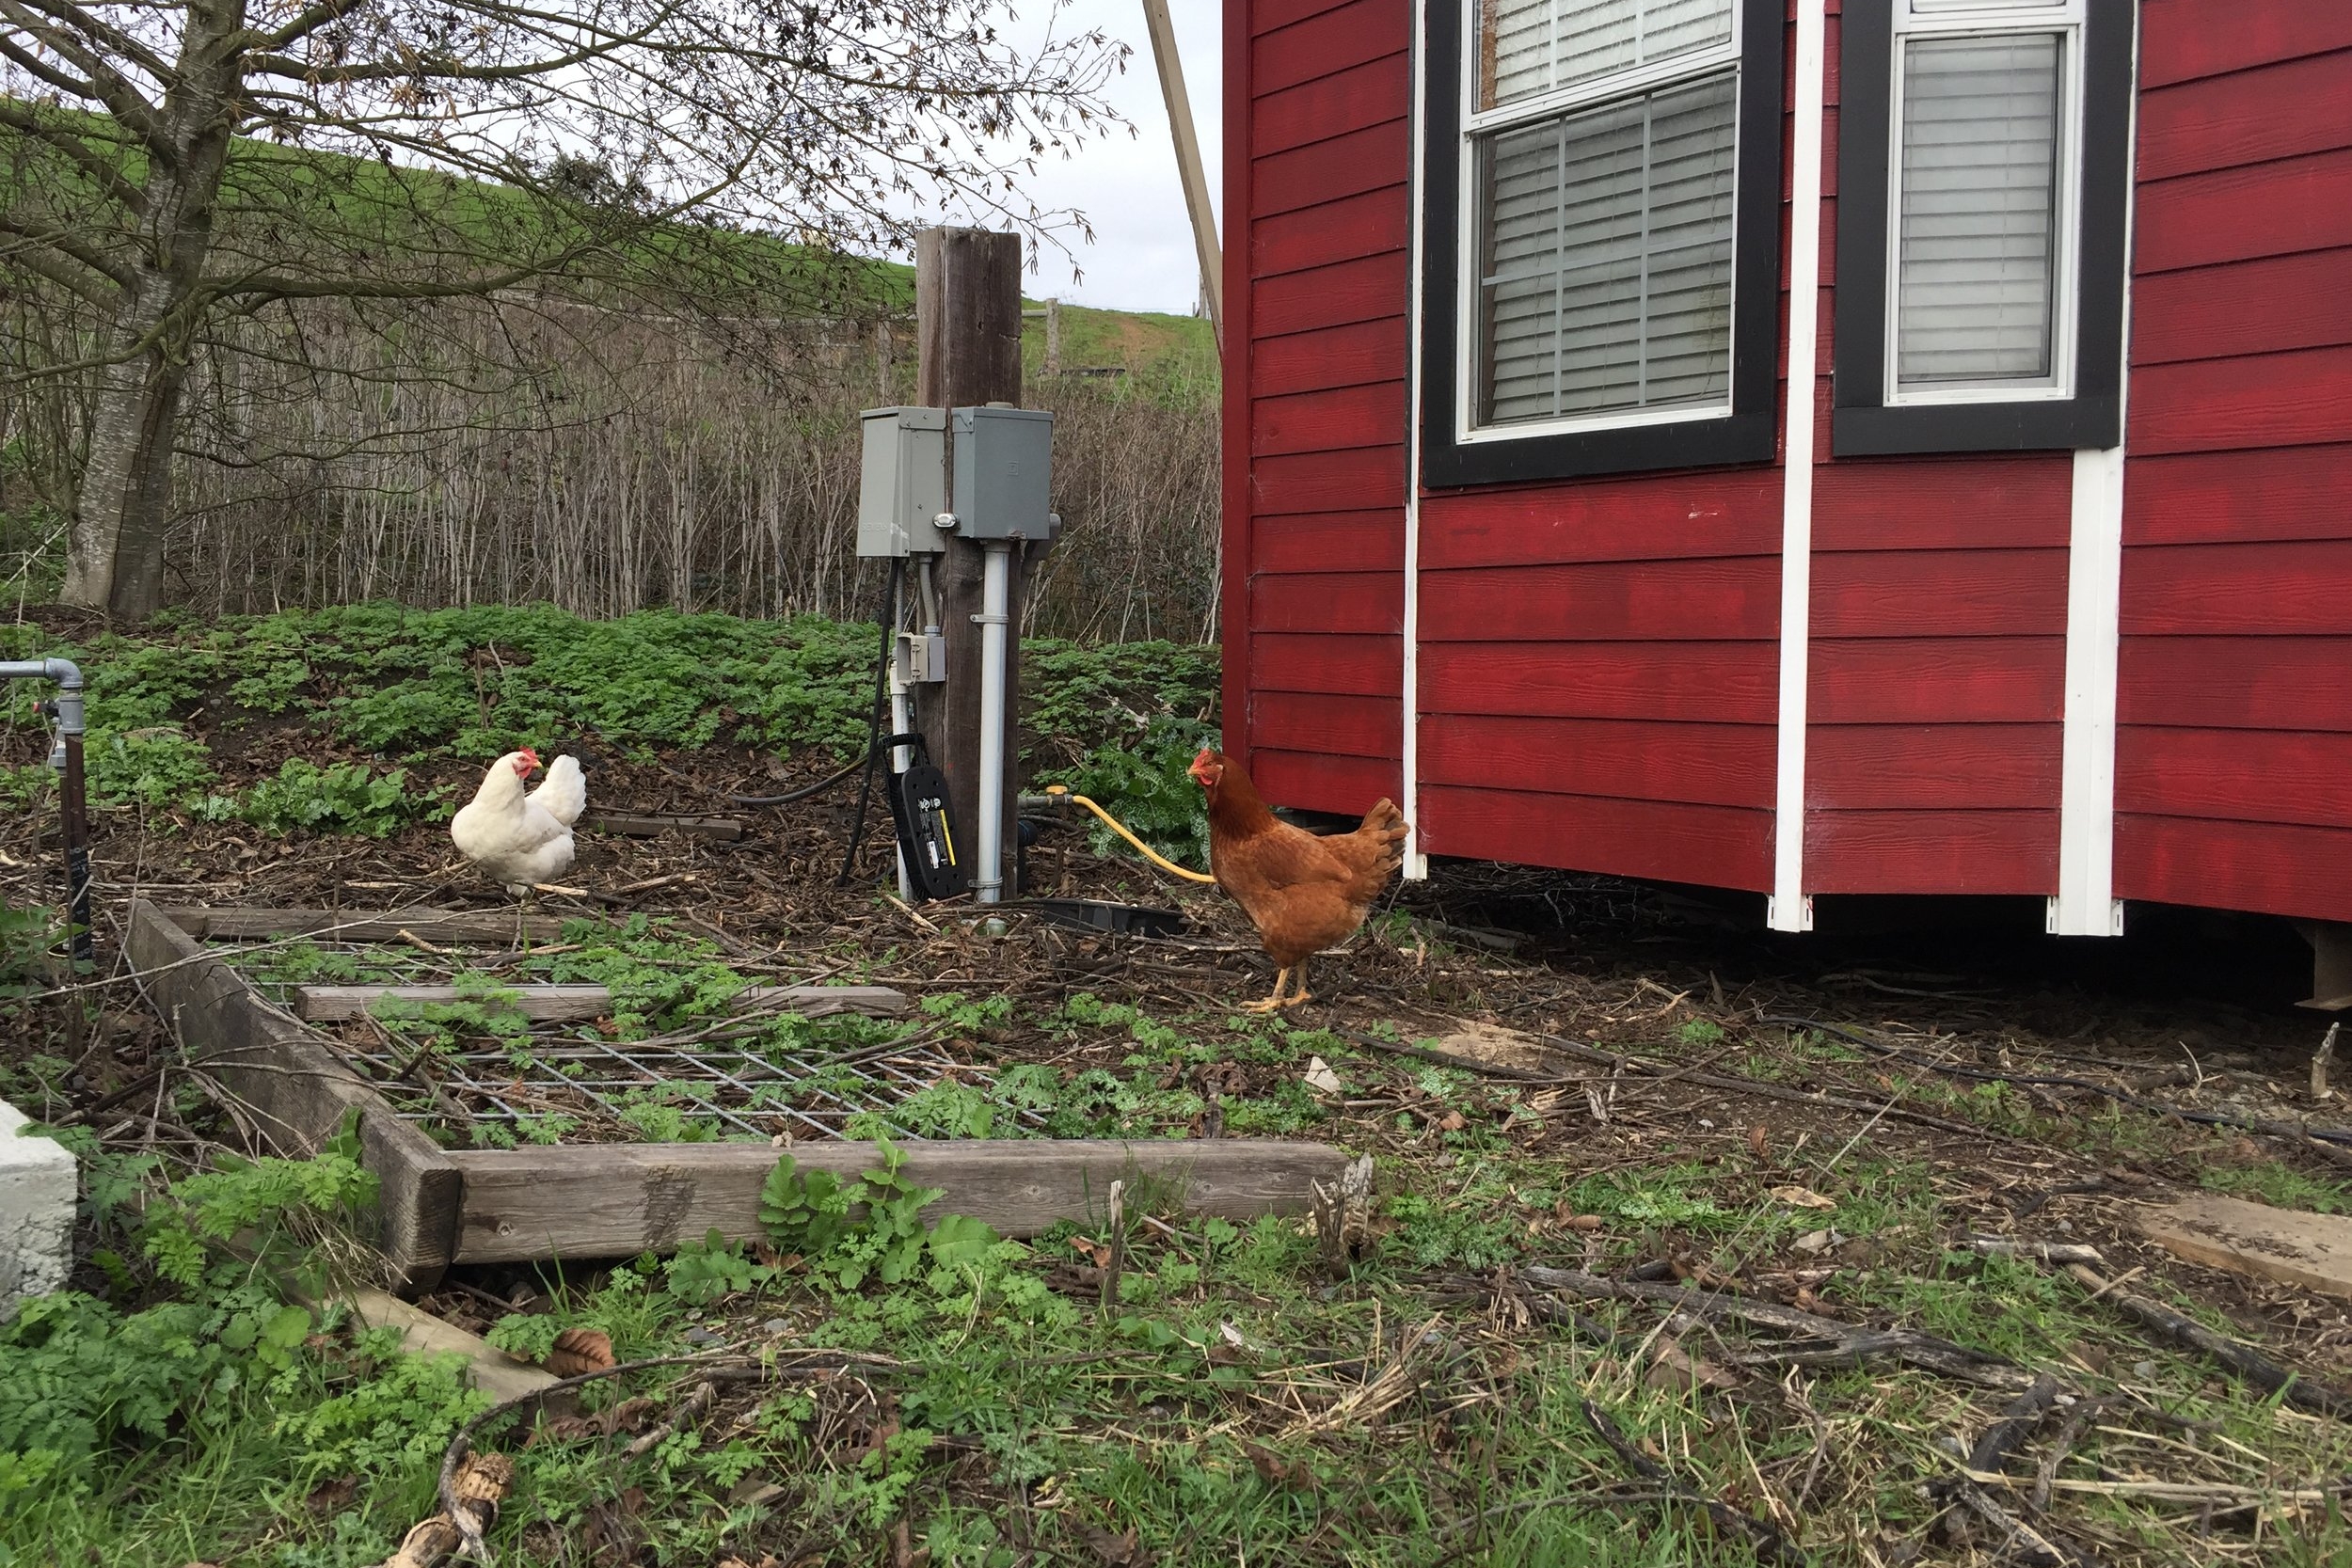 Met a couple of backyard hens